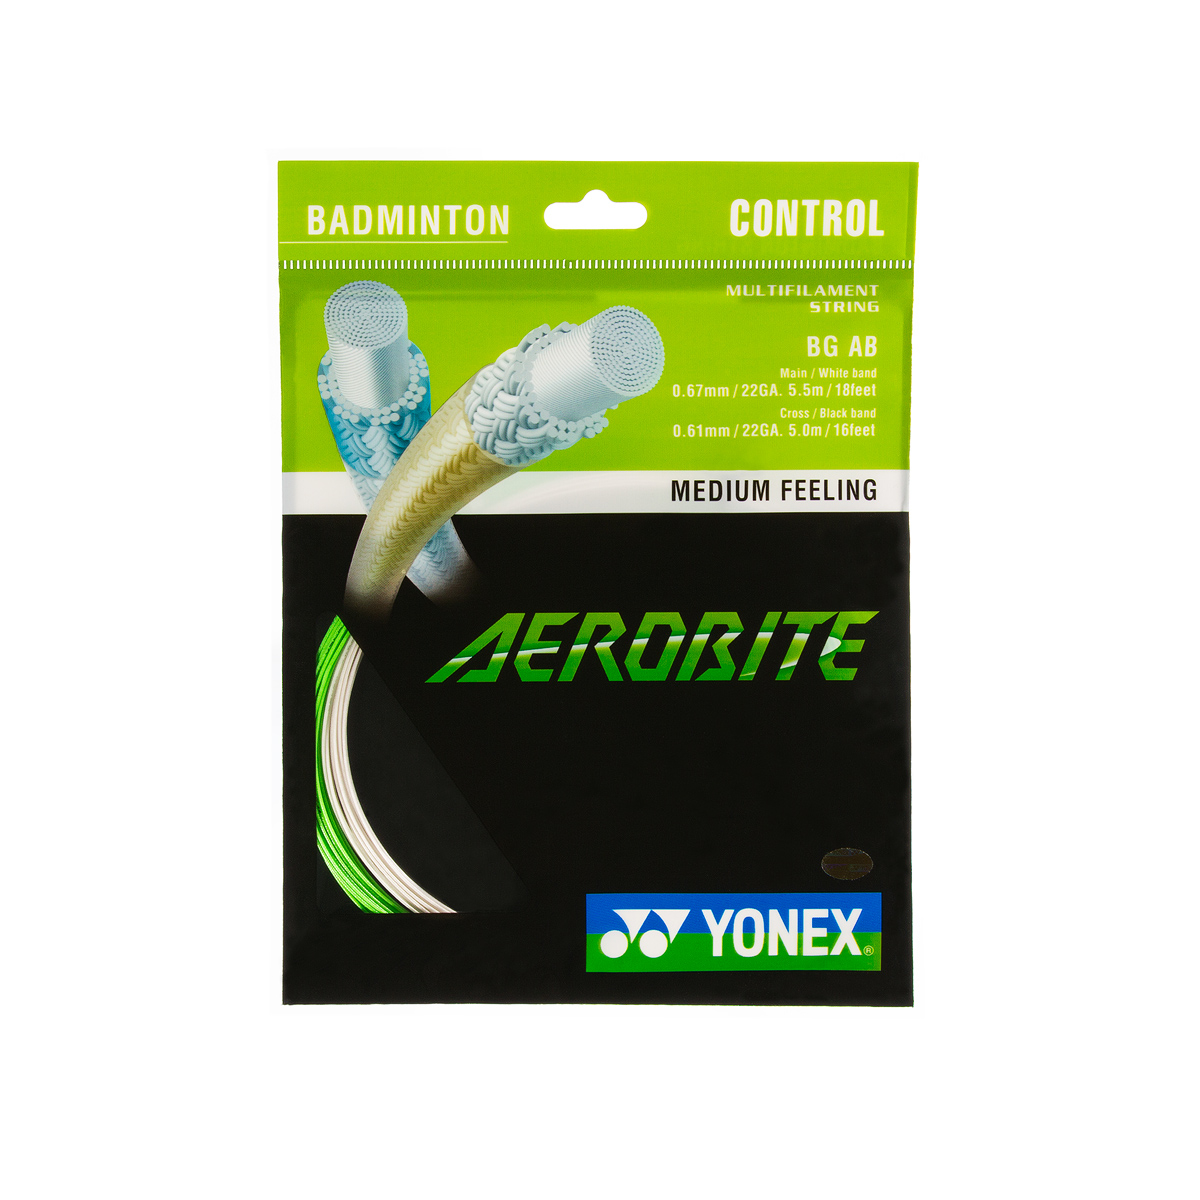 YONEX Badminton Saite - 16 BG AEROBITE SETDetailbild - 1